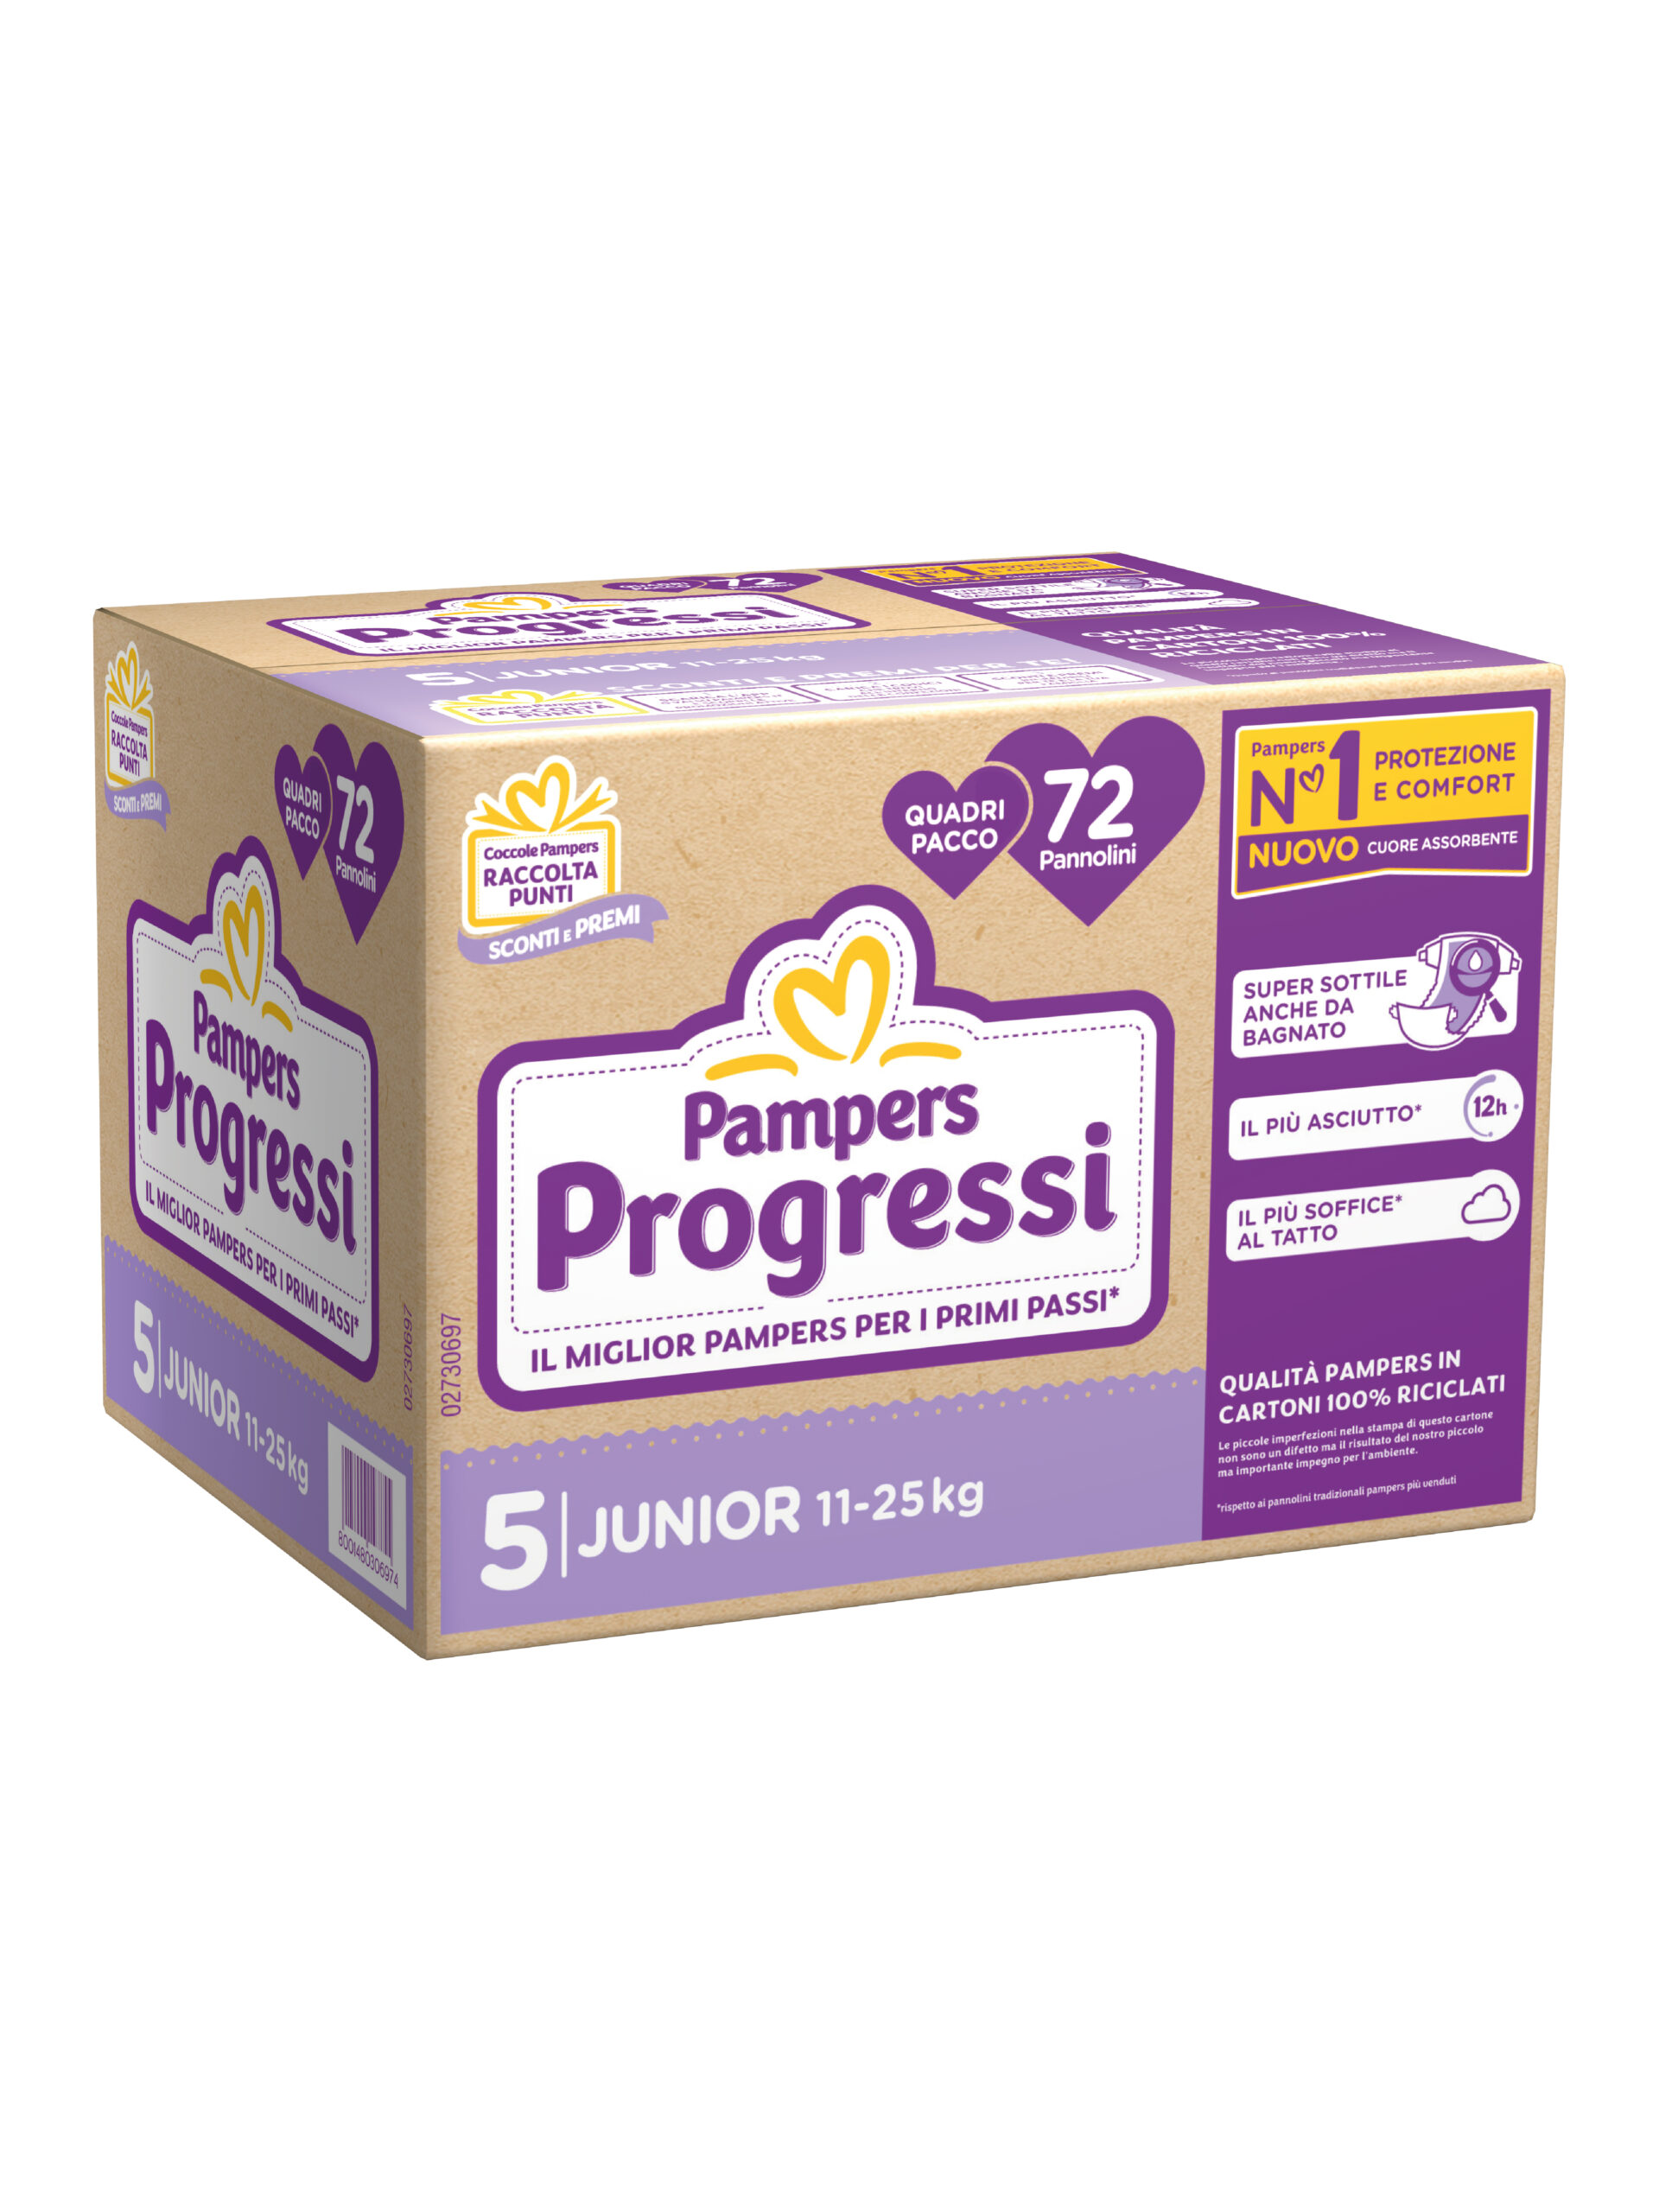 Pampers progressi junior quadri pacco x72 - Pampers